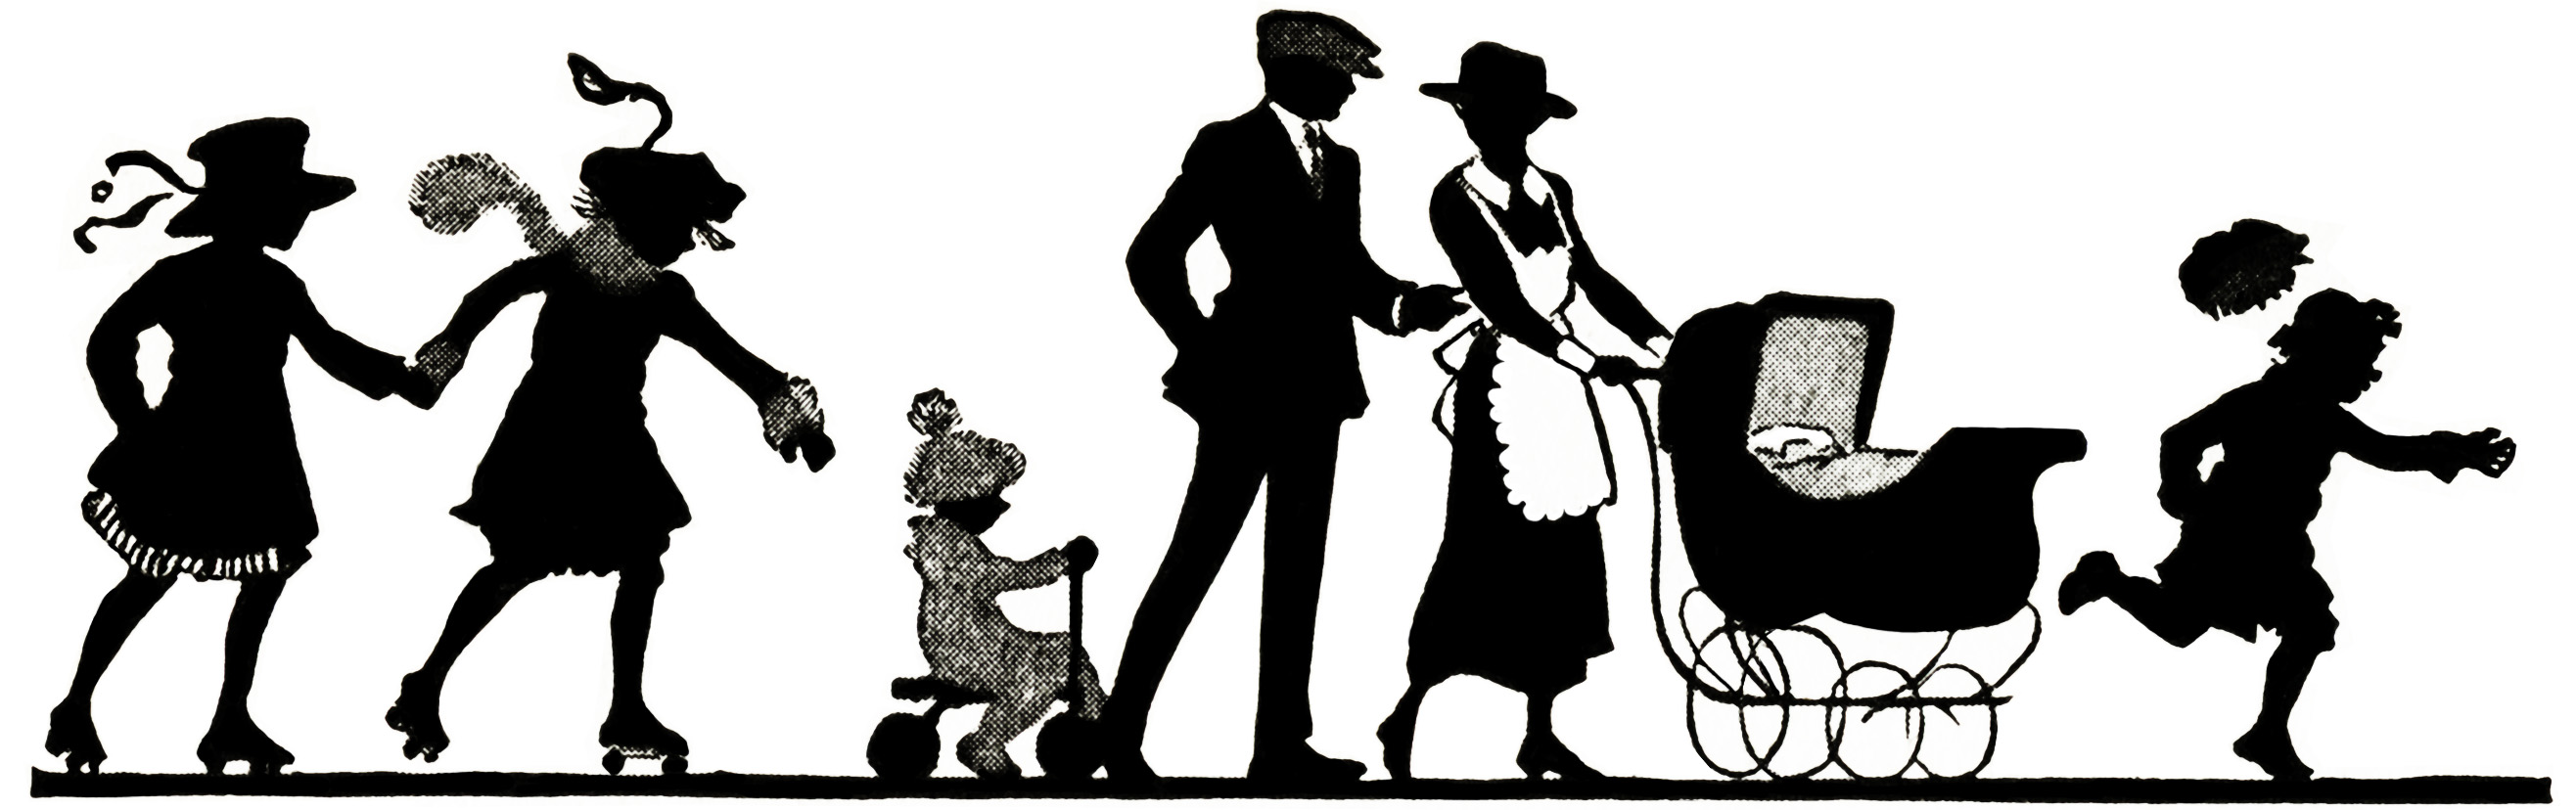 clip art free family silhouette - photo #15